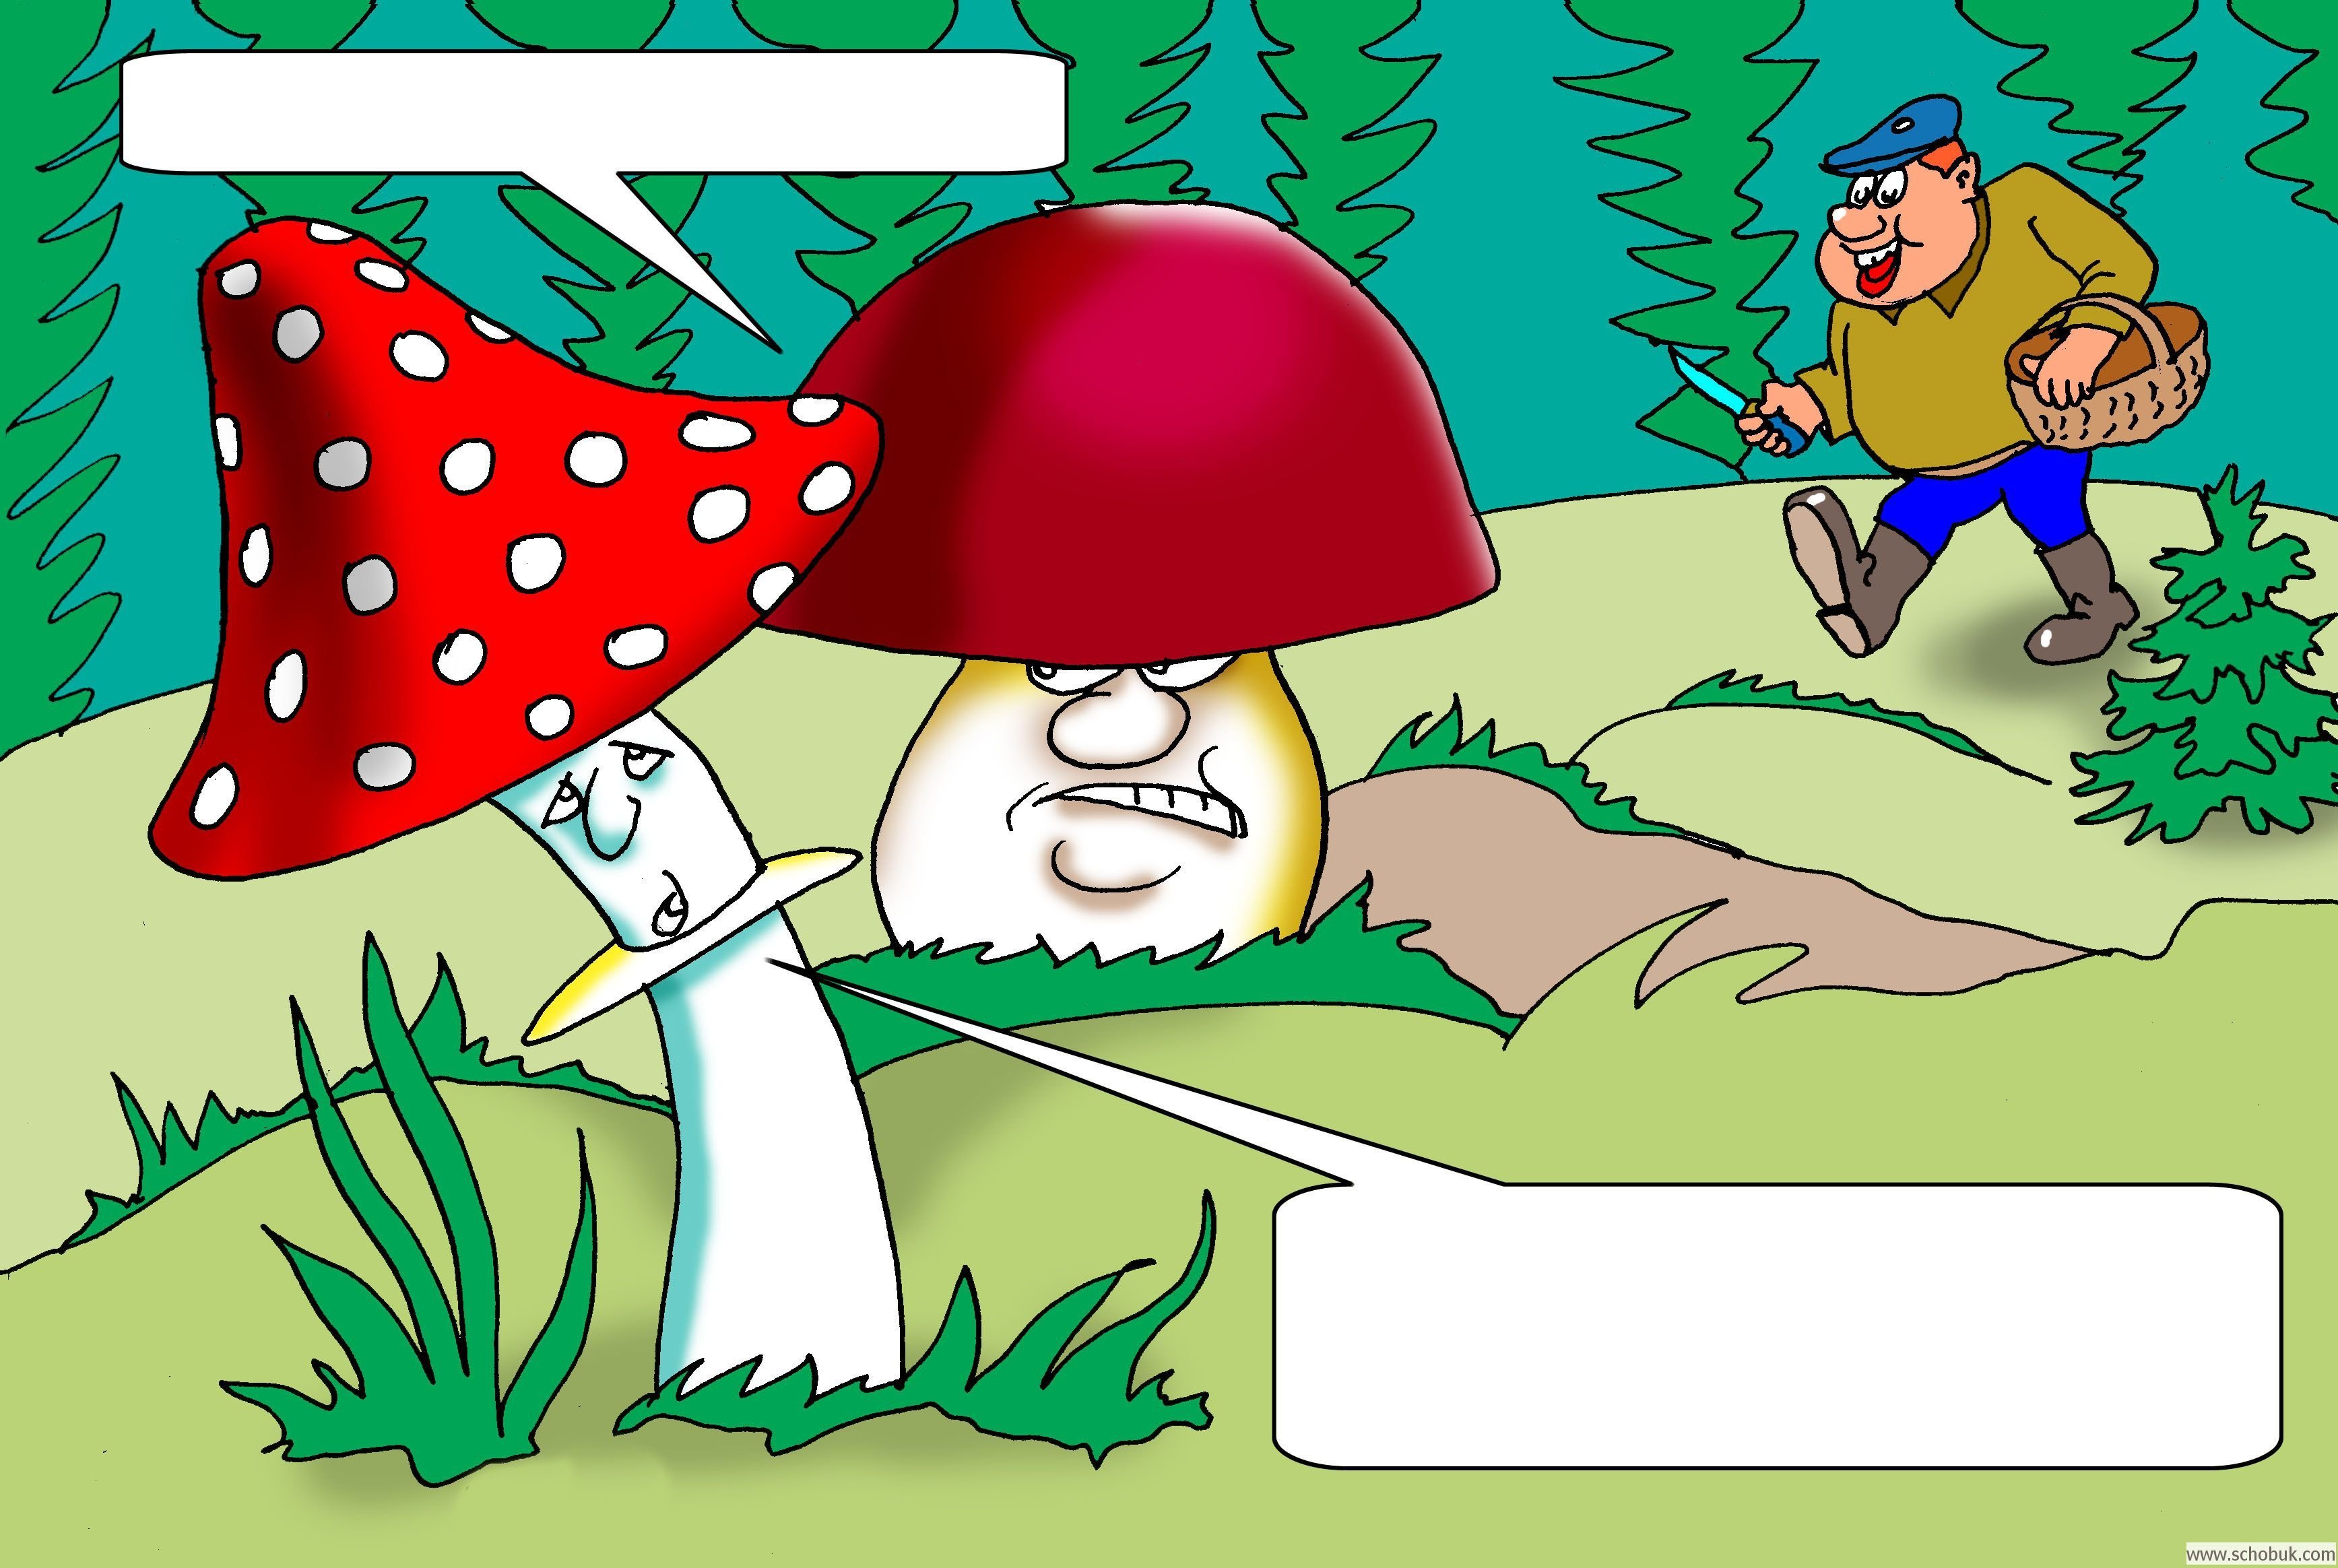 Шутки про сбор грибов